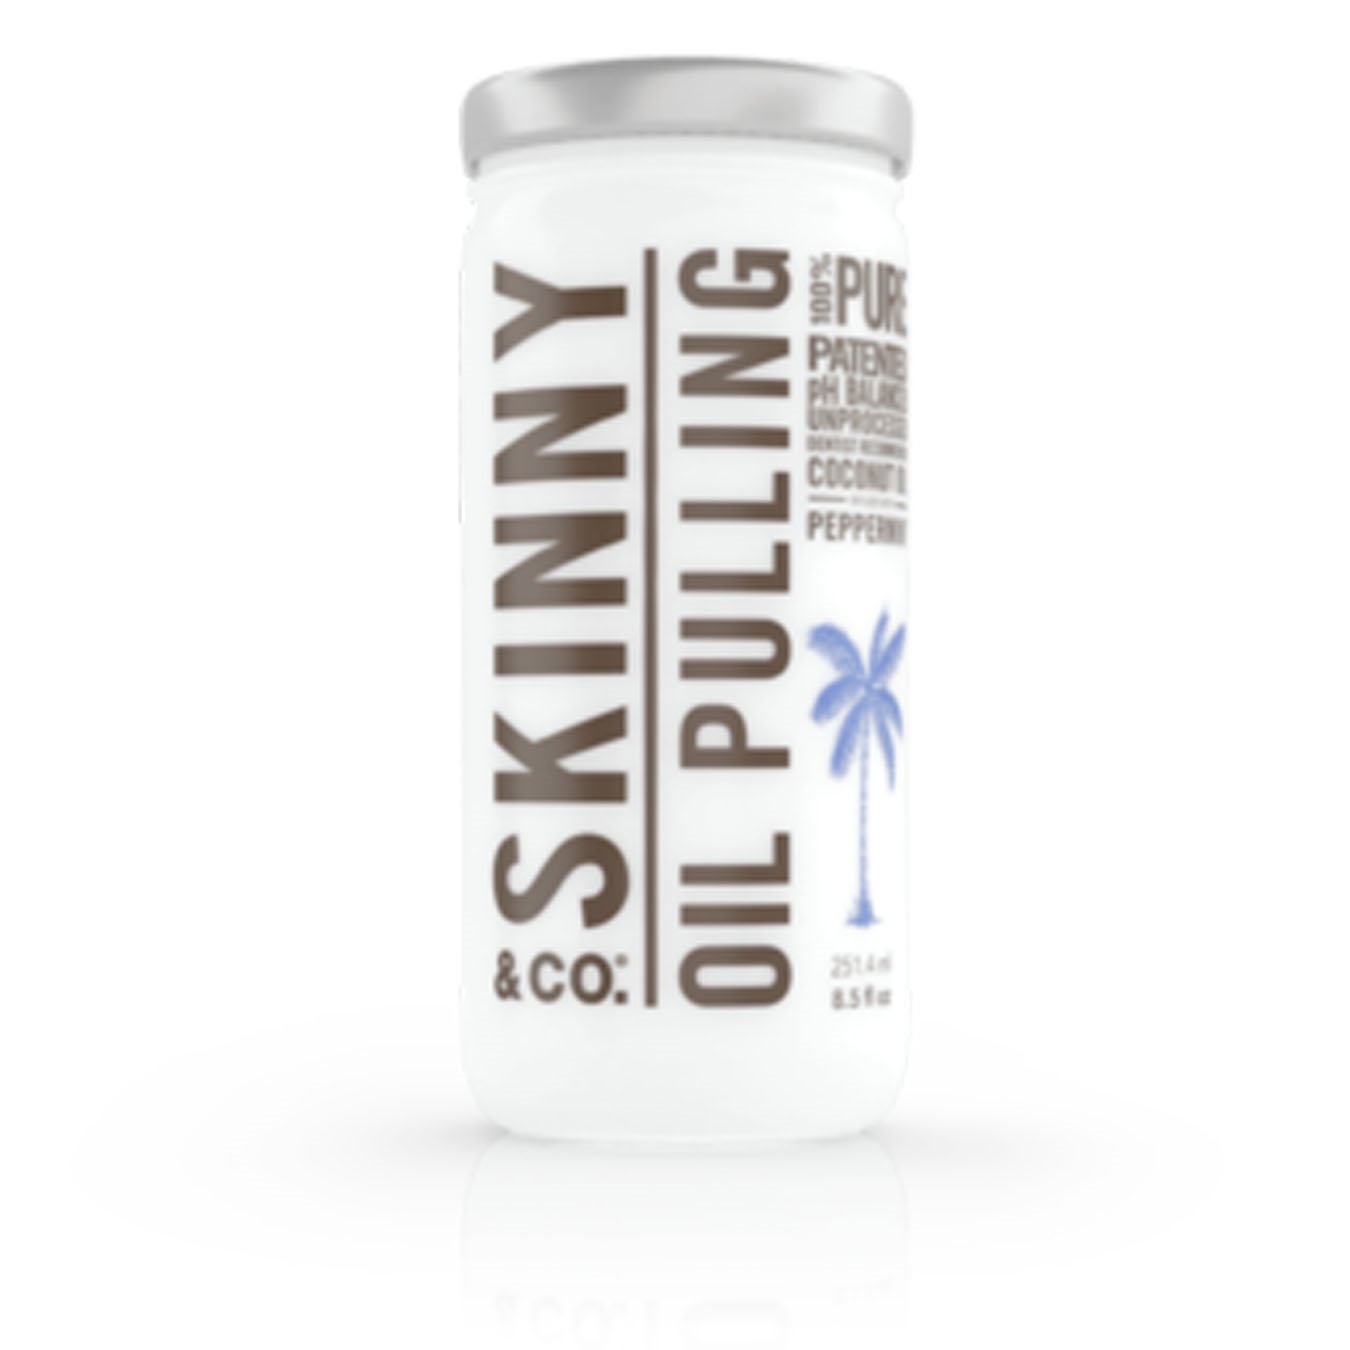 Skinny & Co. Oil Pulling- Peppermint (8.5 oz.)